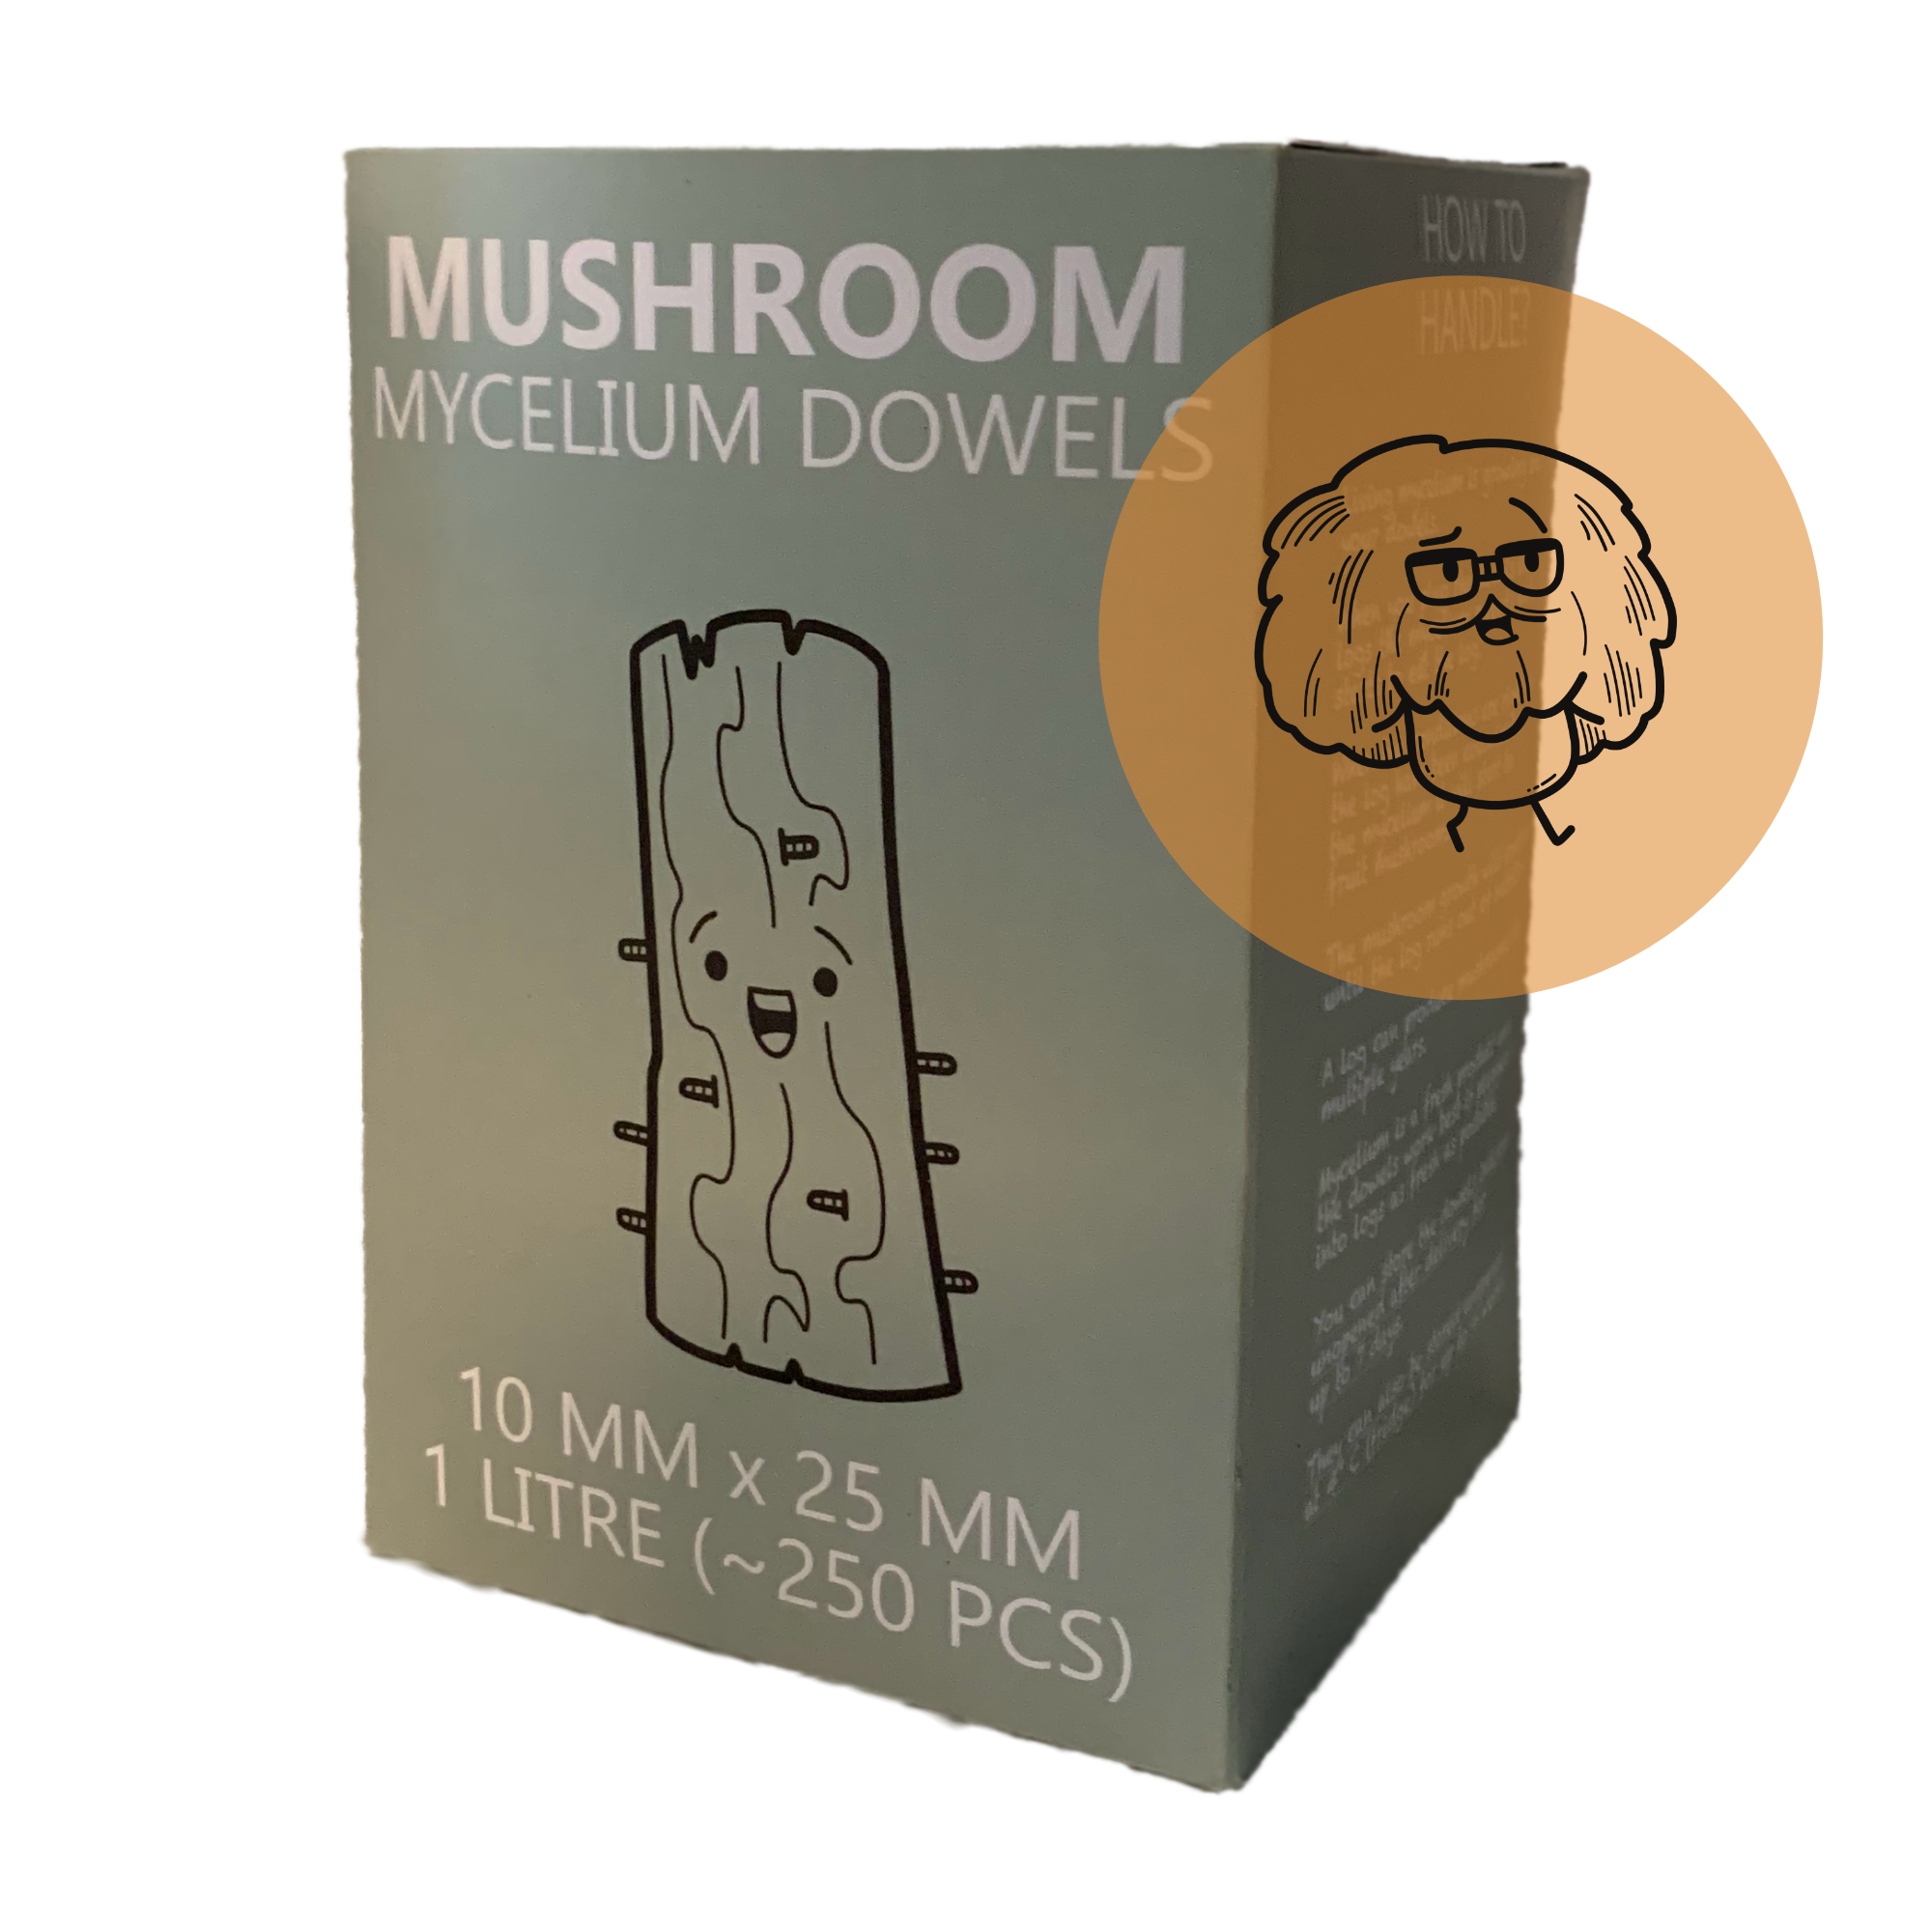 Lion’s mane mushroom dowels